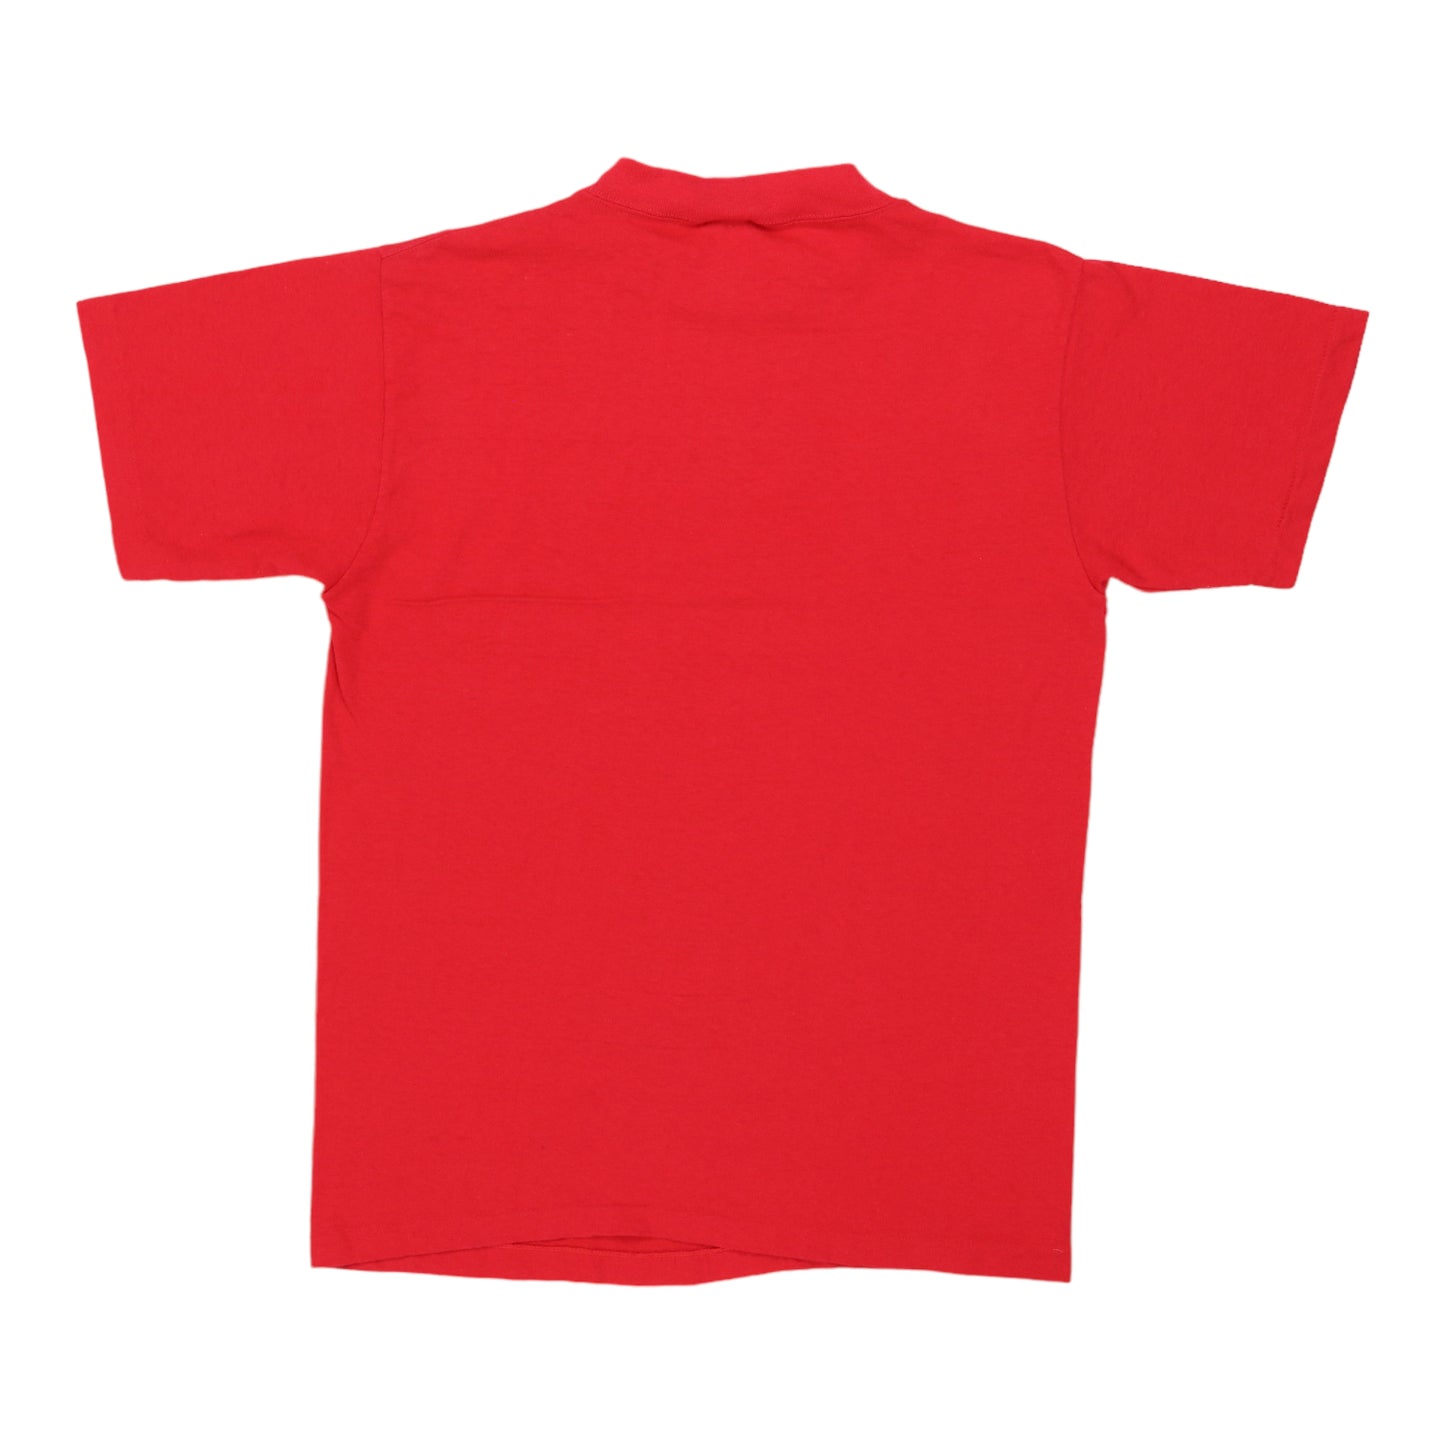 1970s Nike Swoosh Red Shirt